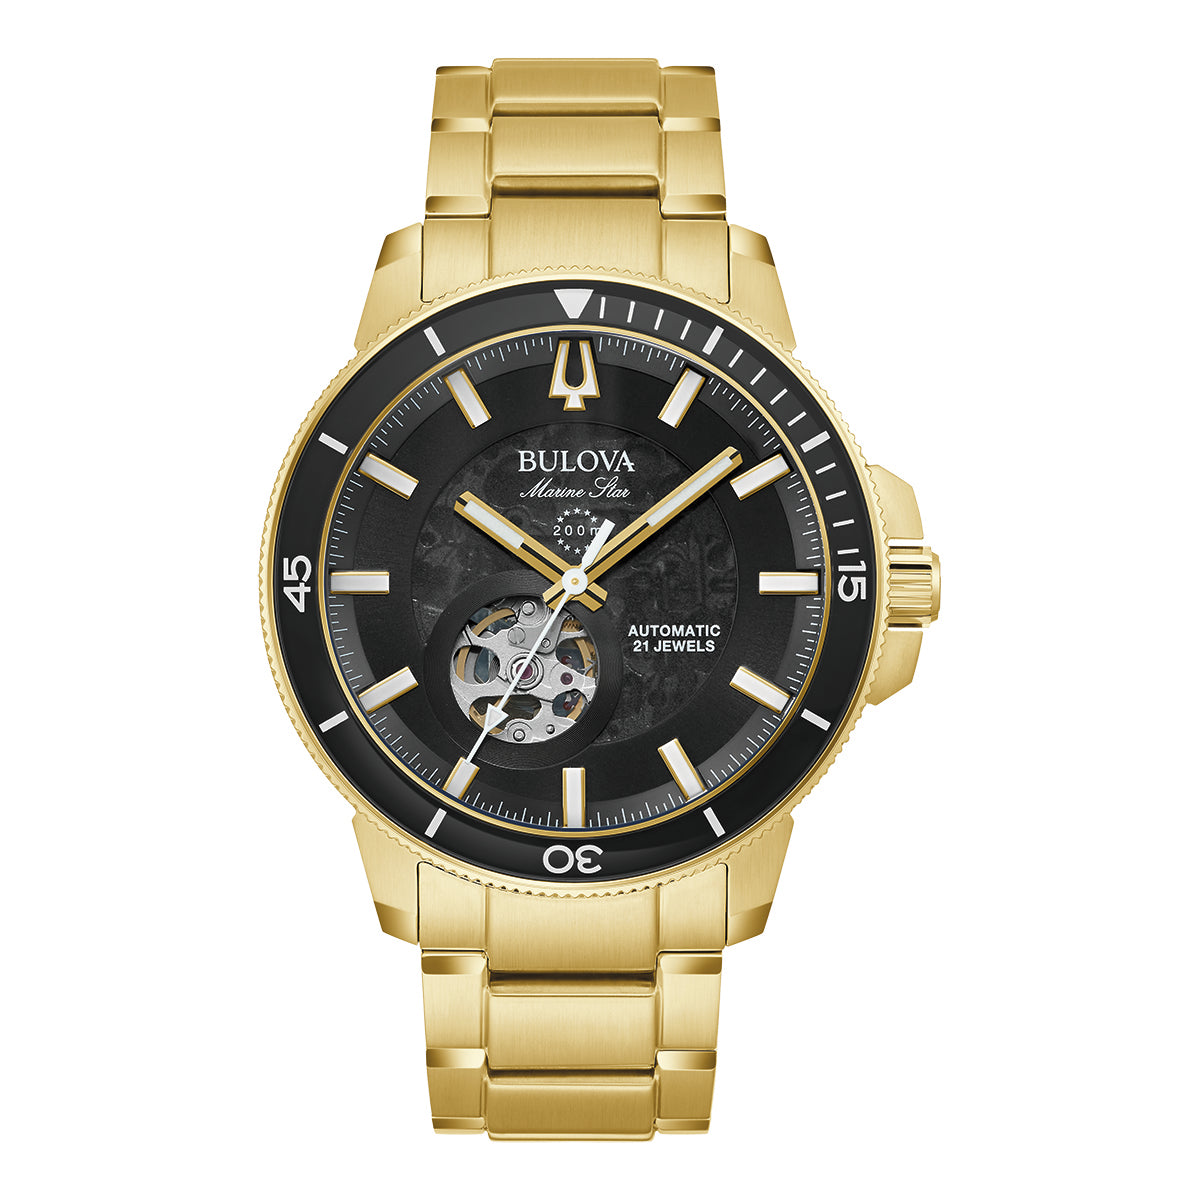 Bulova Men's Marine Star Automatic Watch 97A174